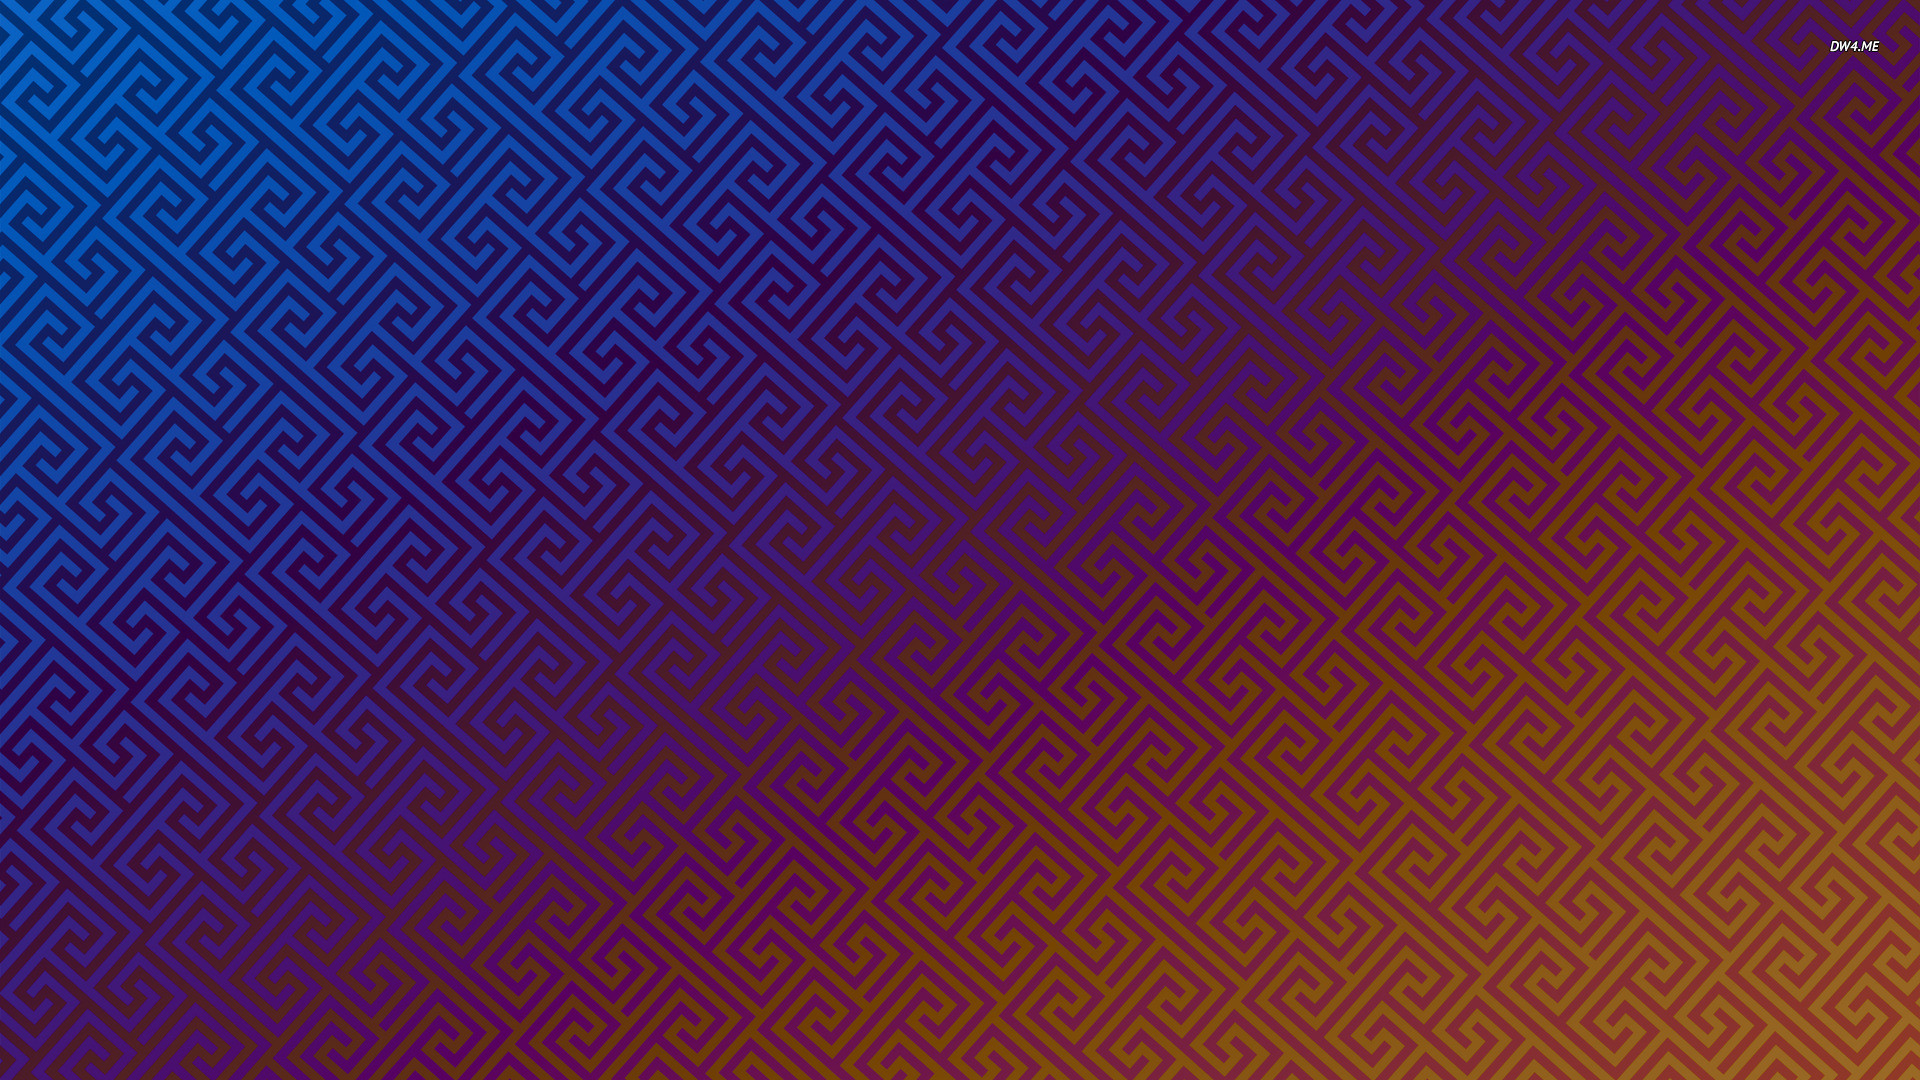 Purple And Orange Wallpaper 1920x1080 1920x1080